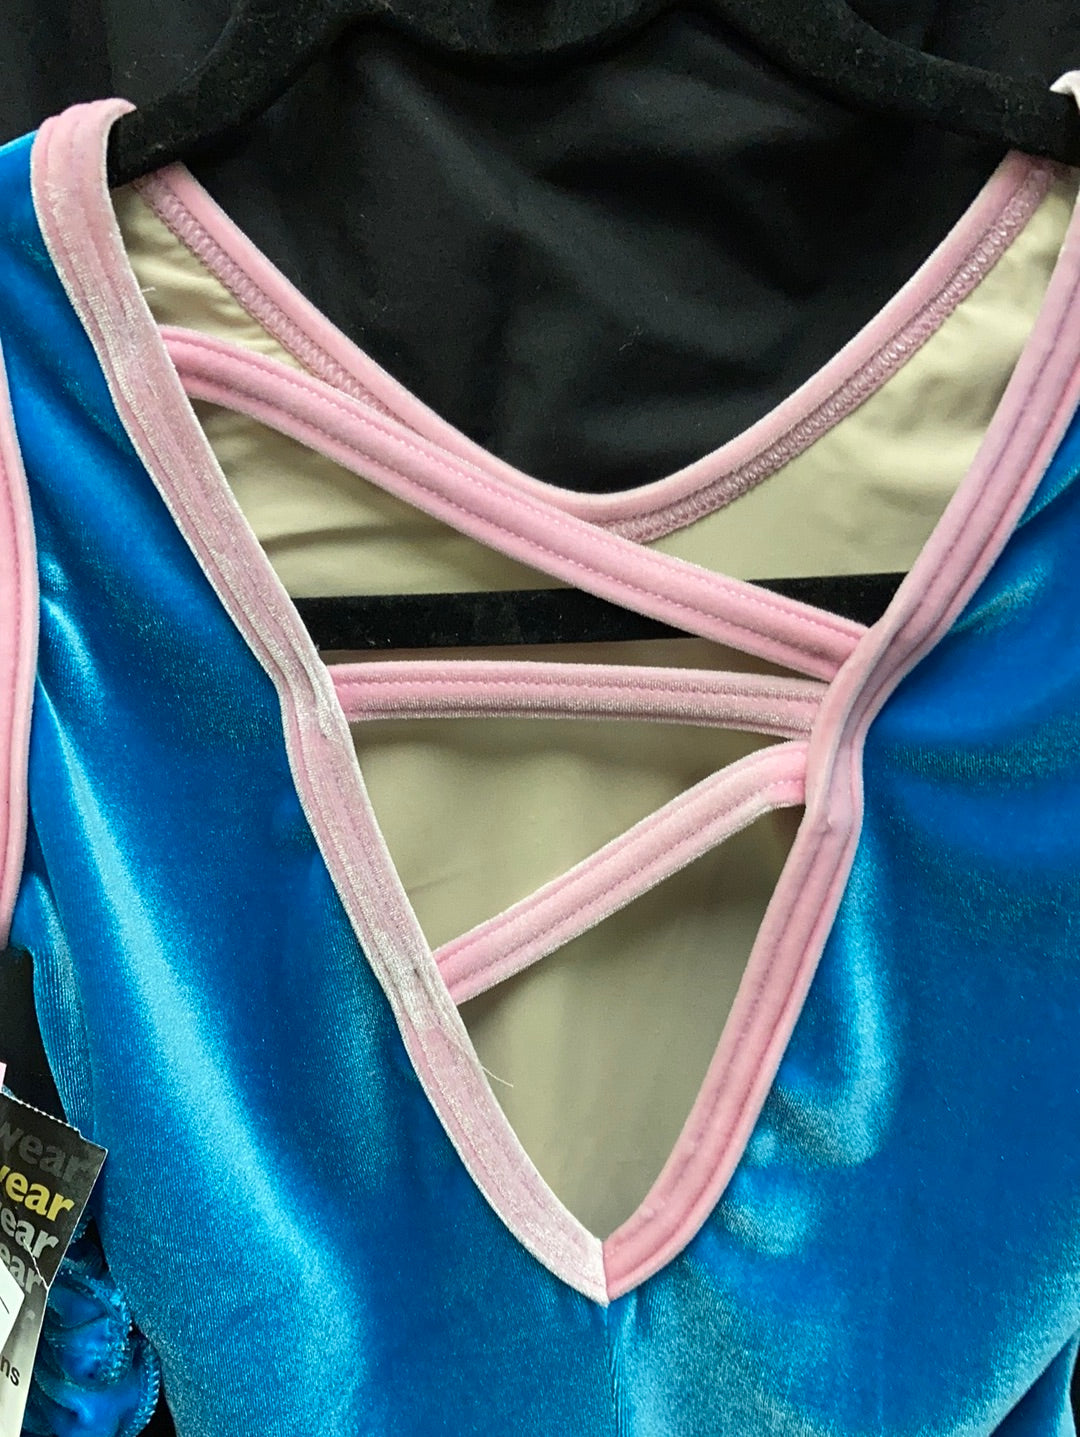 GK Figure Skating Dress Child Large Velvet w/Scrunchie Blue & Pink SK1094